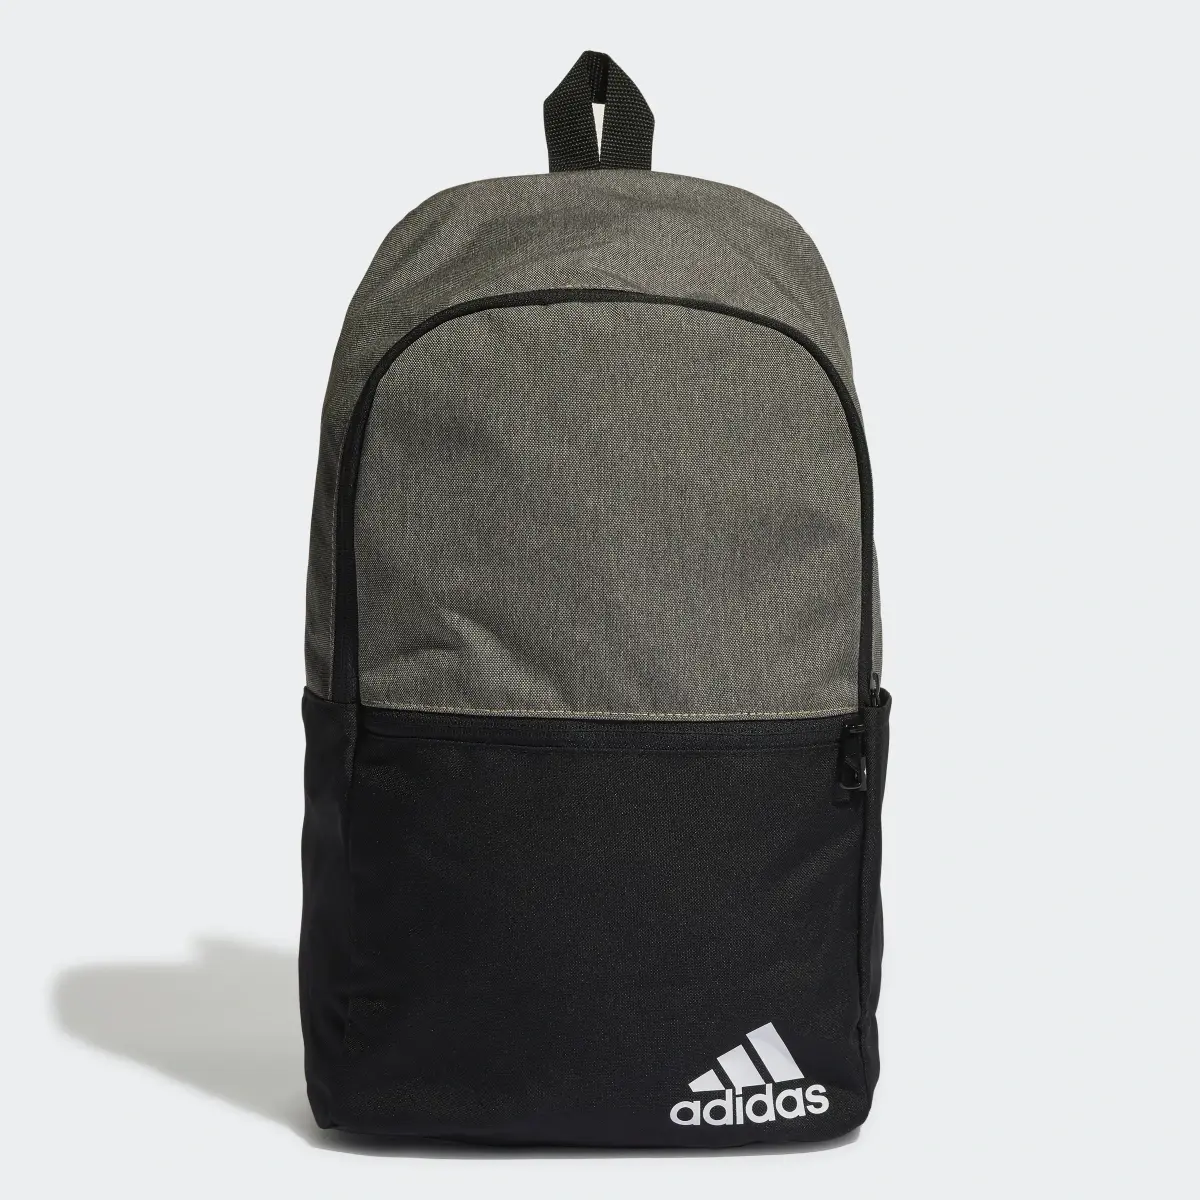 Adidas Daily II Backpack. 2